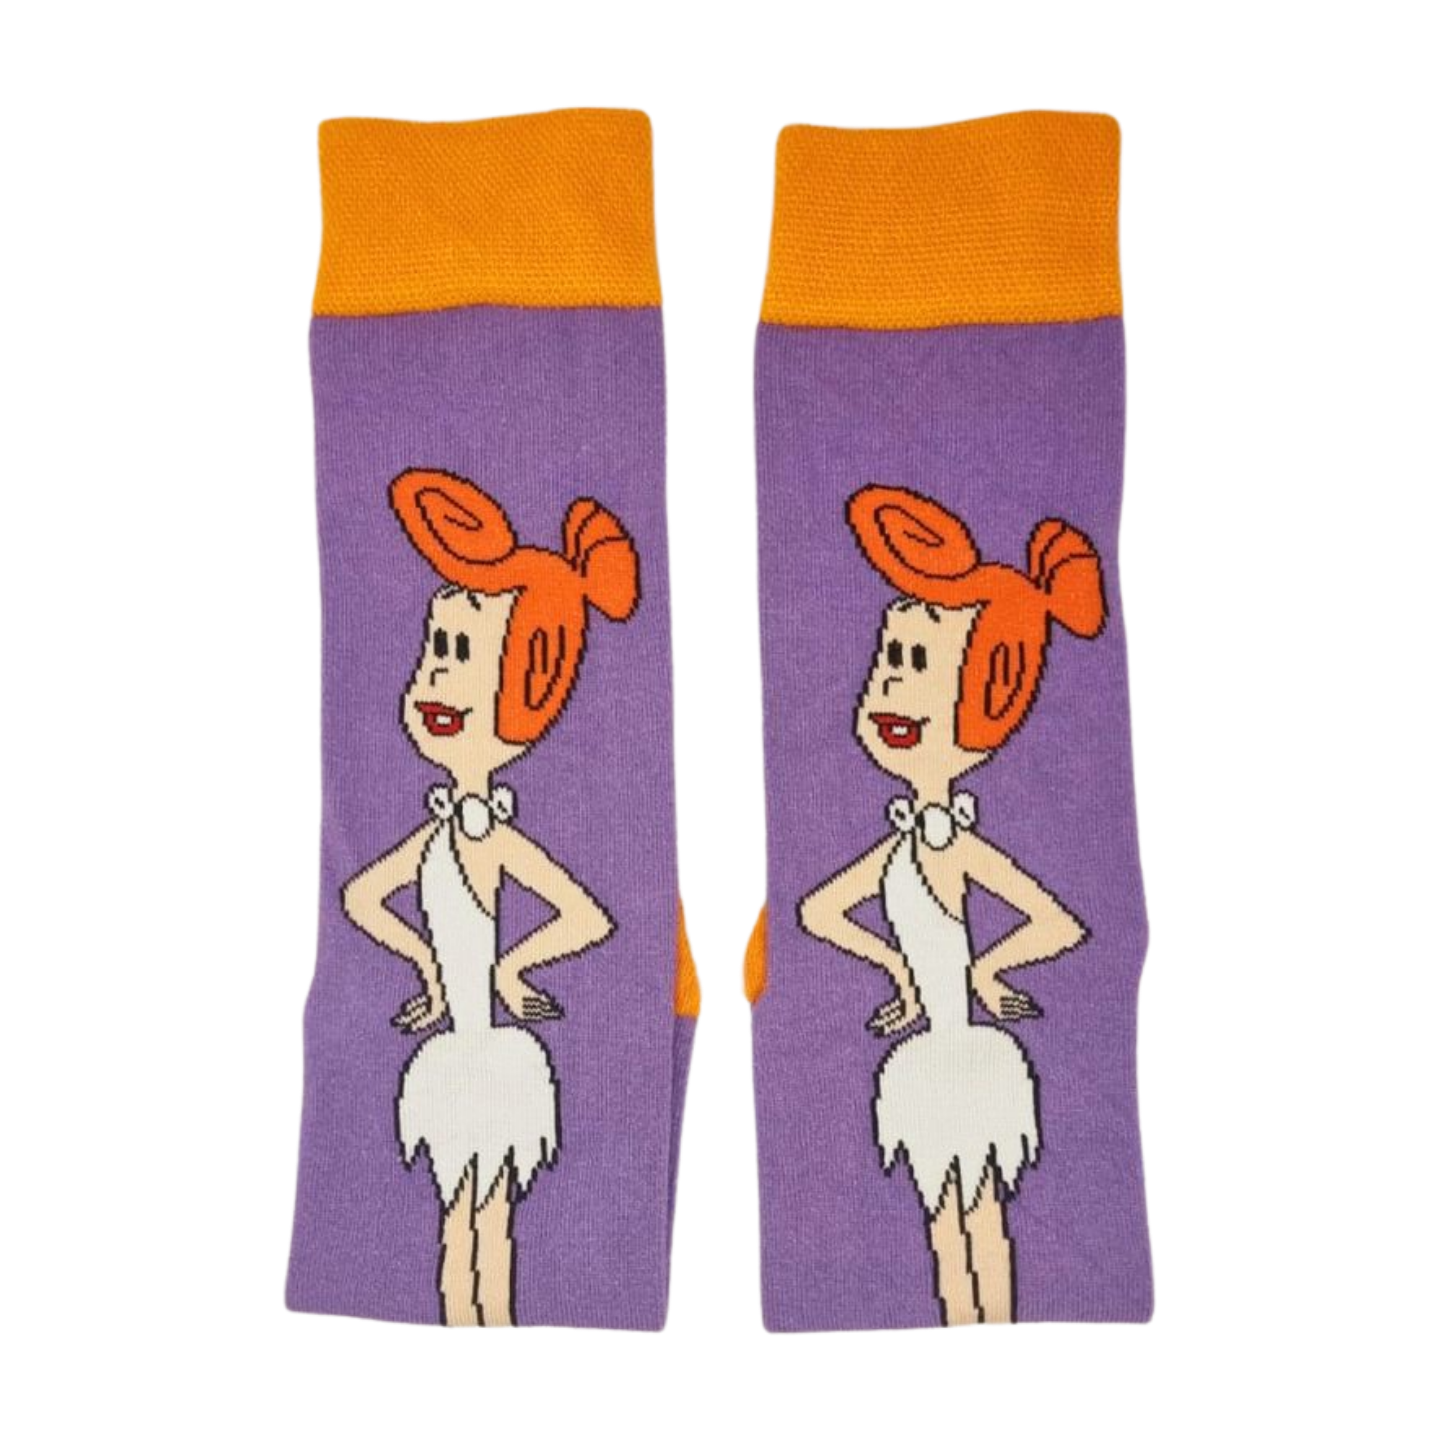 Wilma Flintstone Cartoon Character Socks